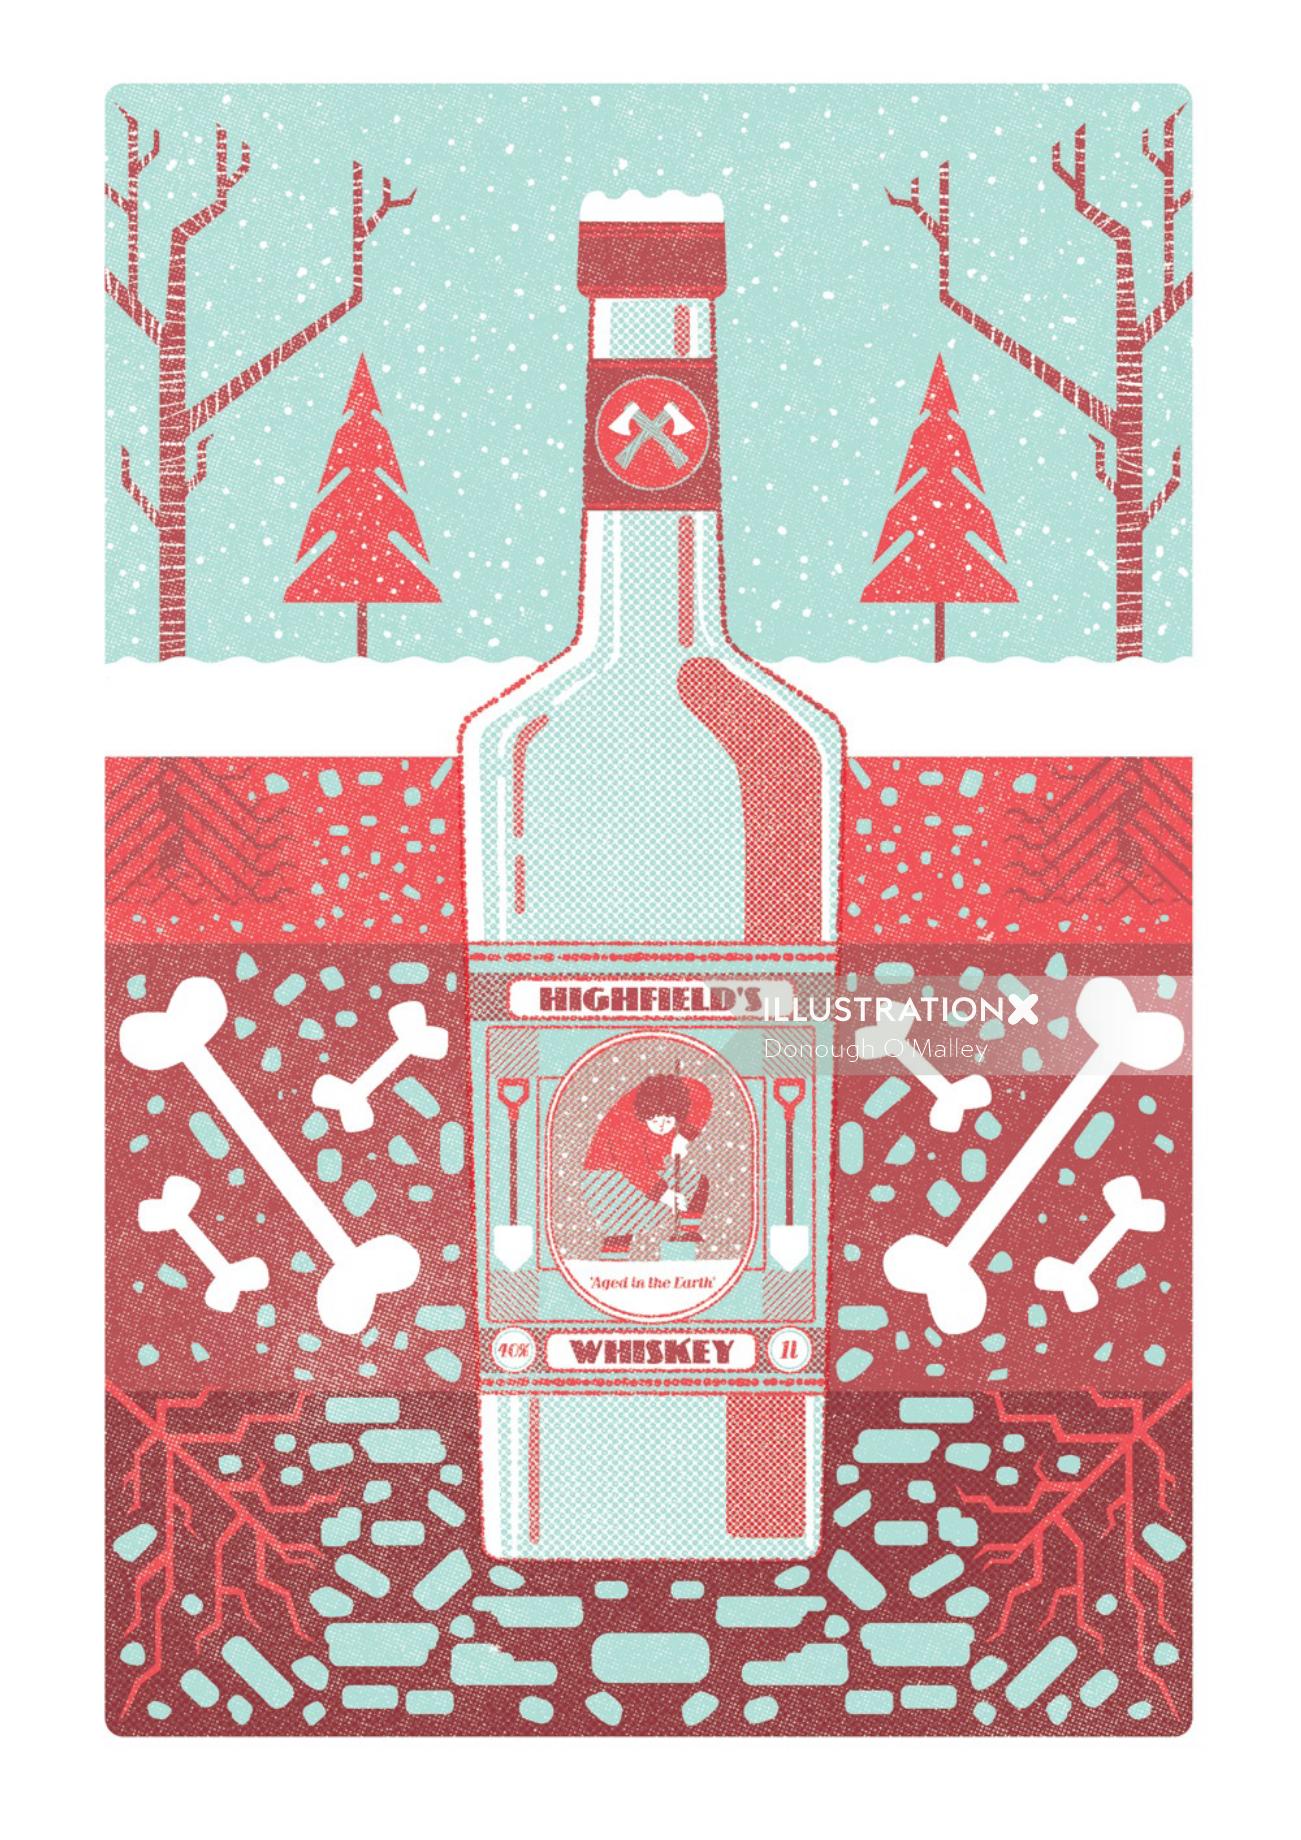 Packaging illustration of Highfields's whiskey 